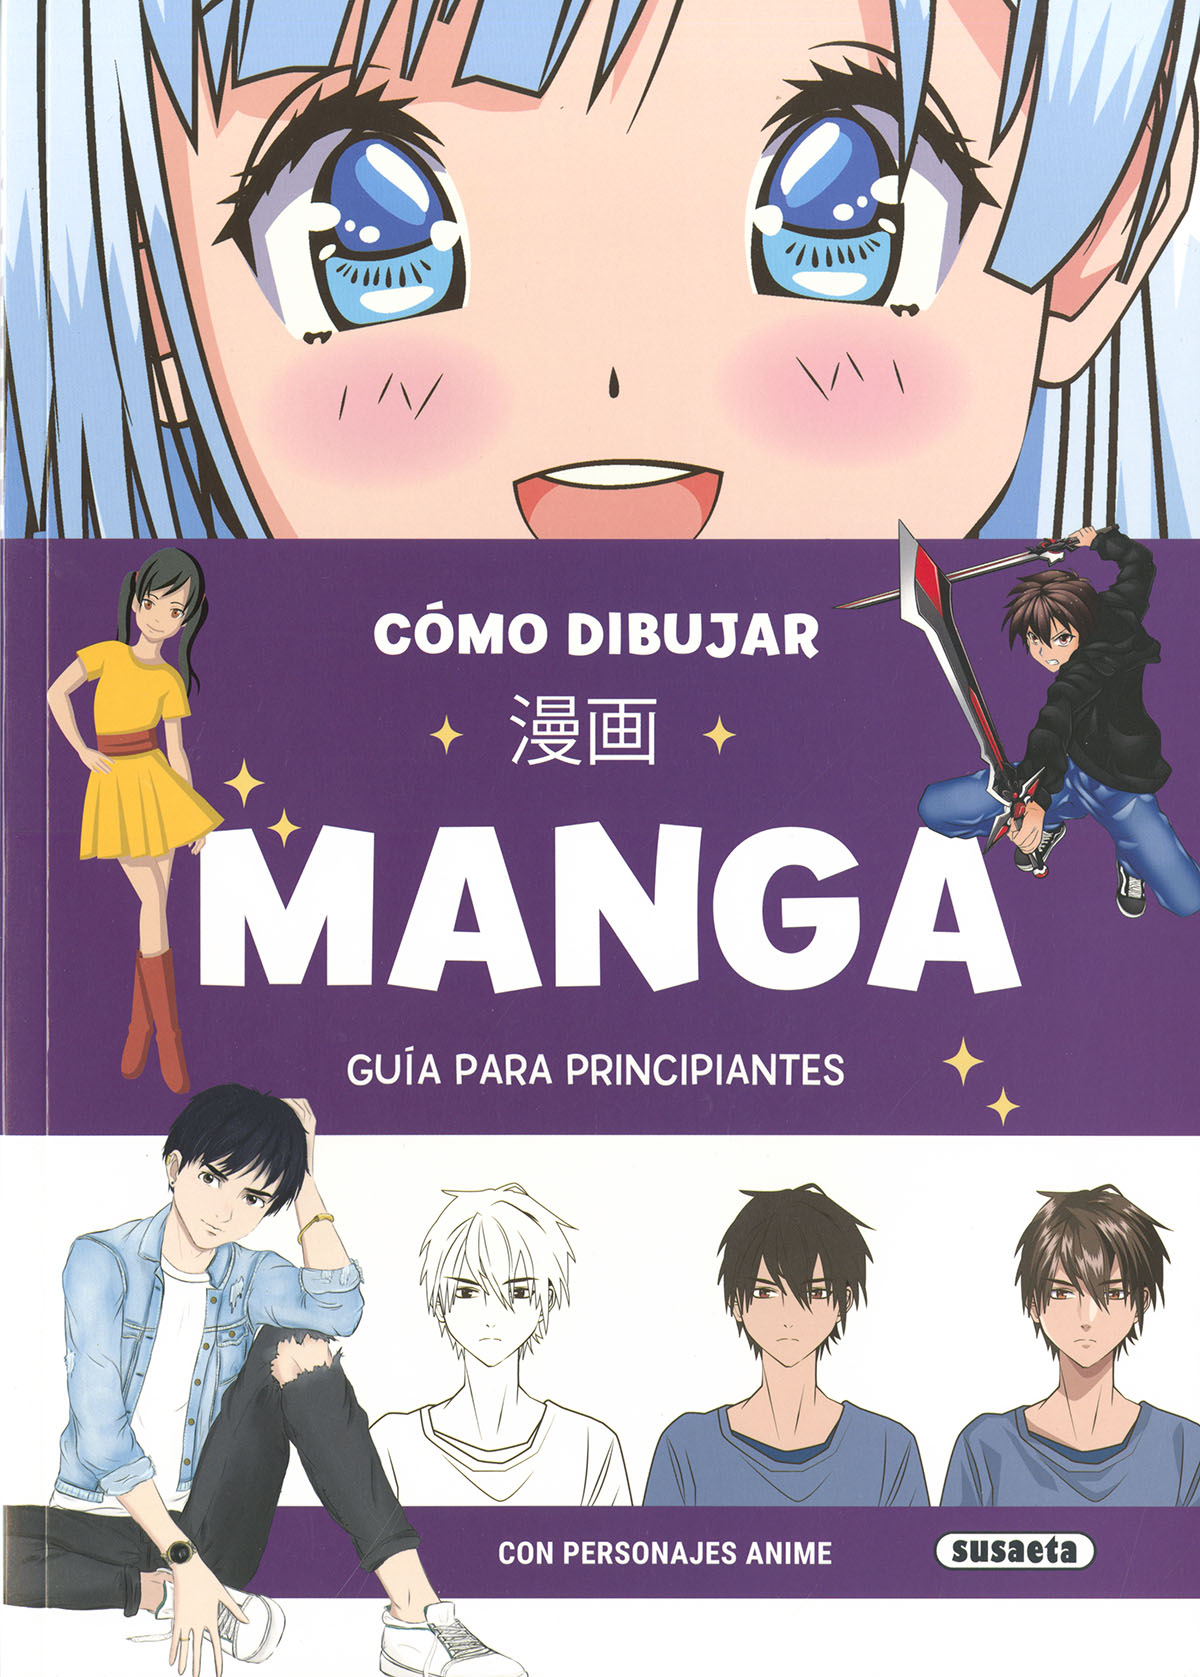 Cmo dibujar Manga